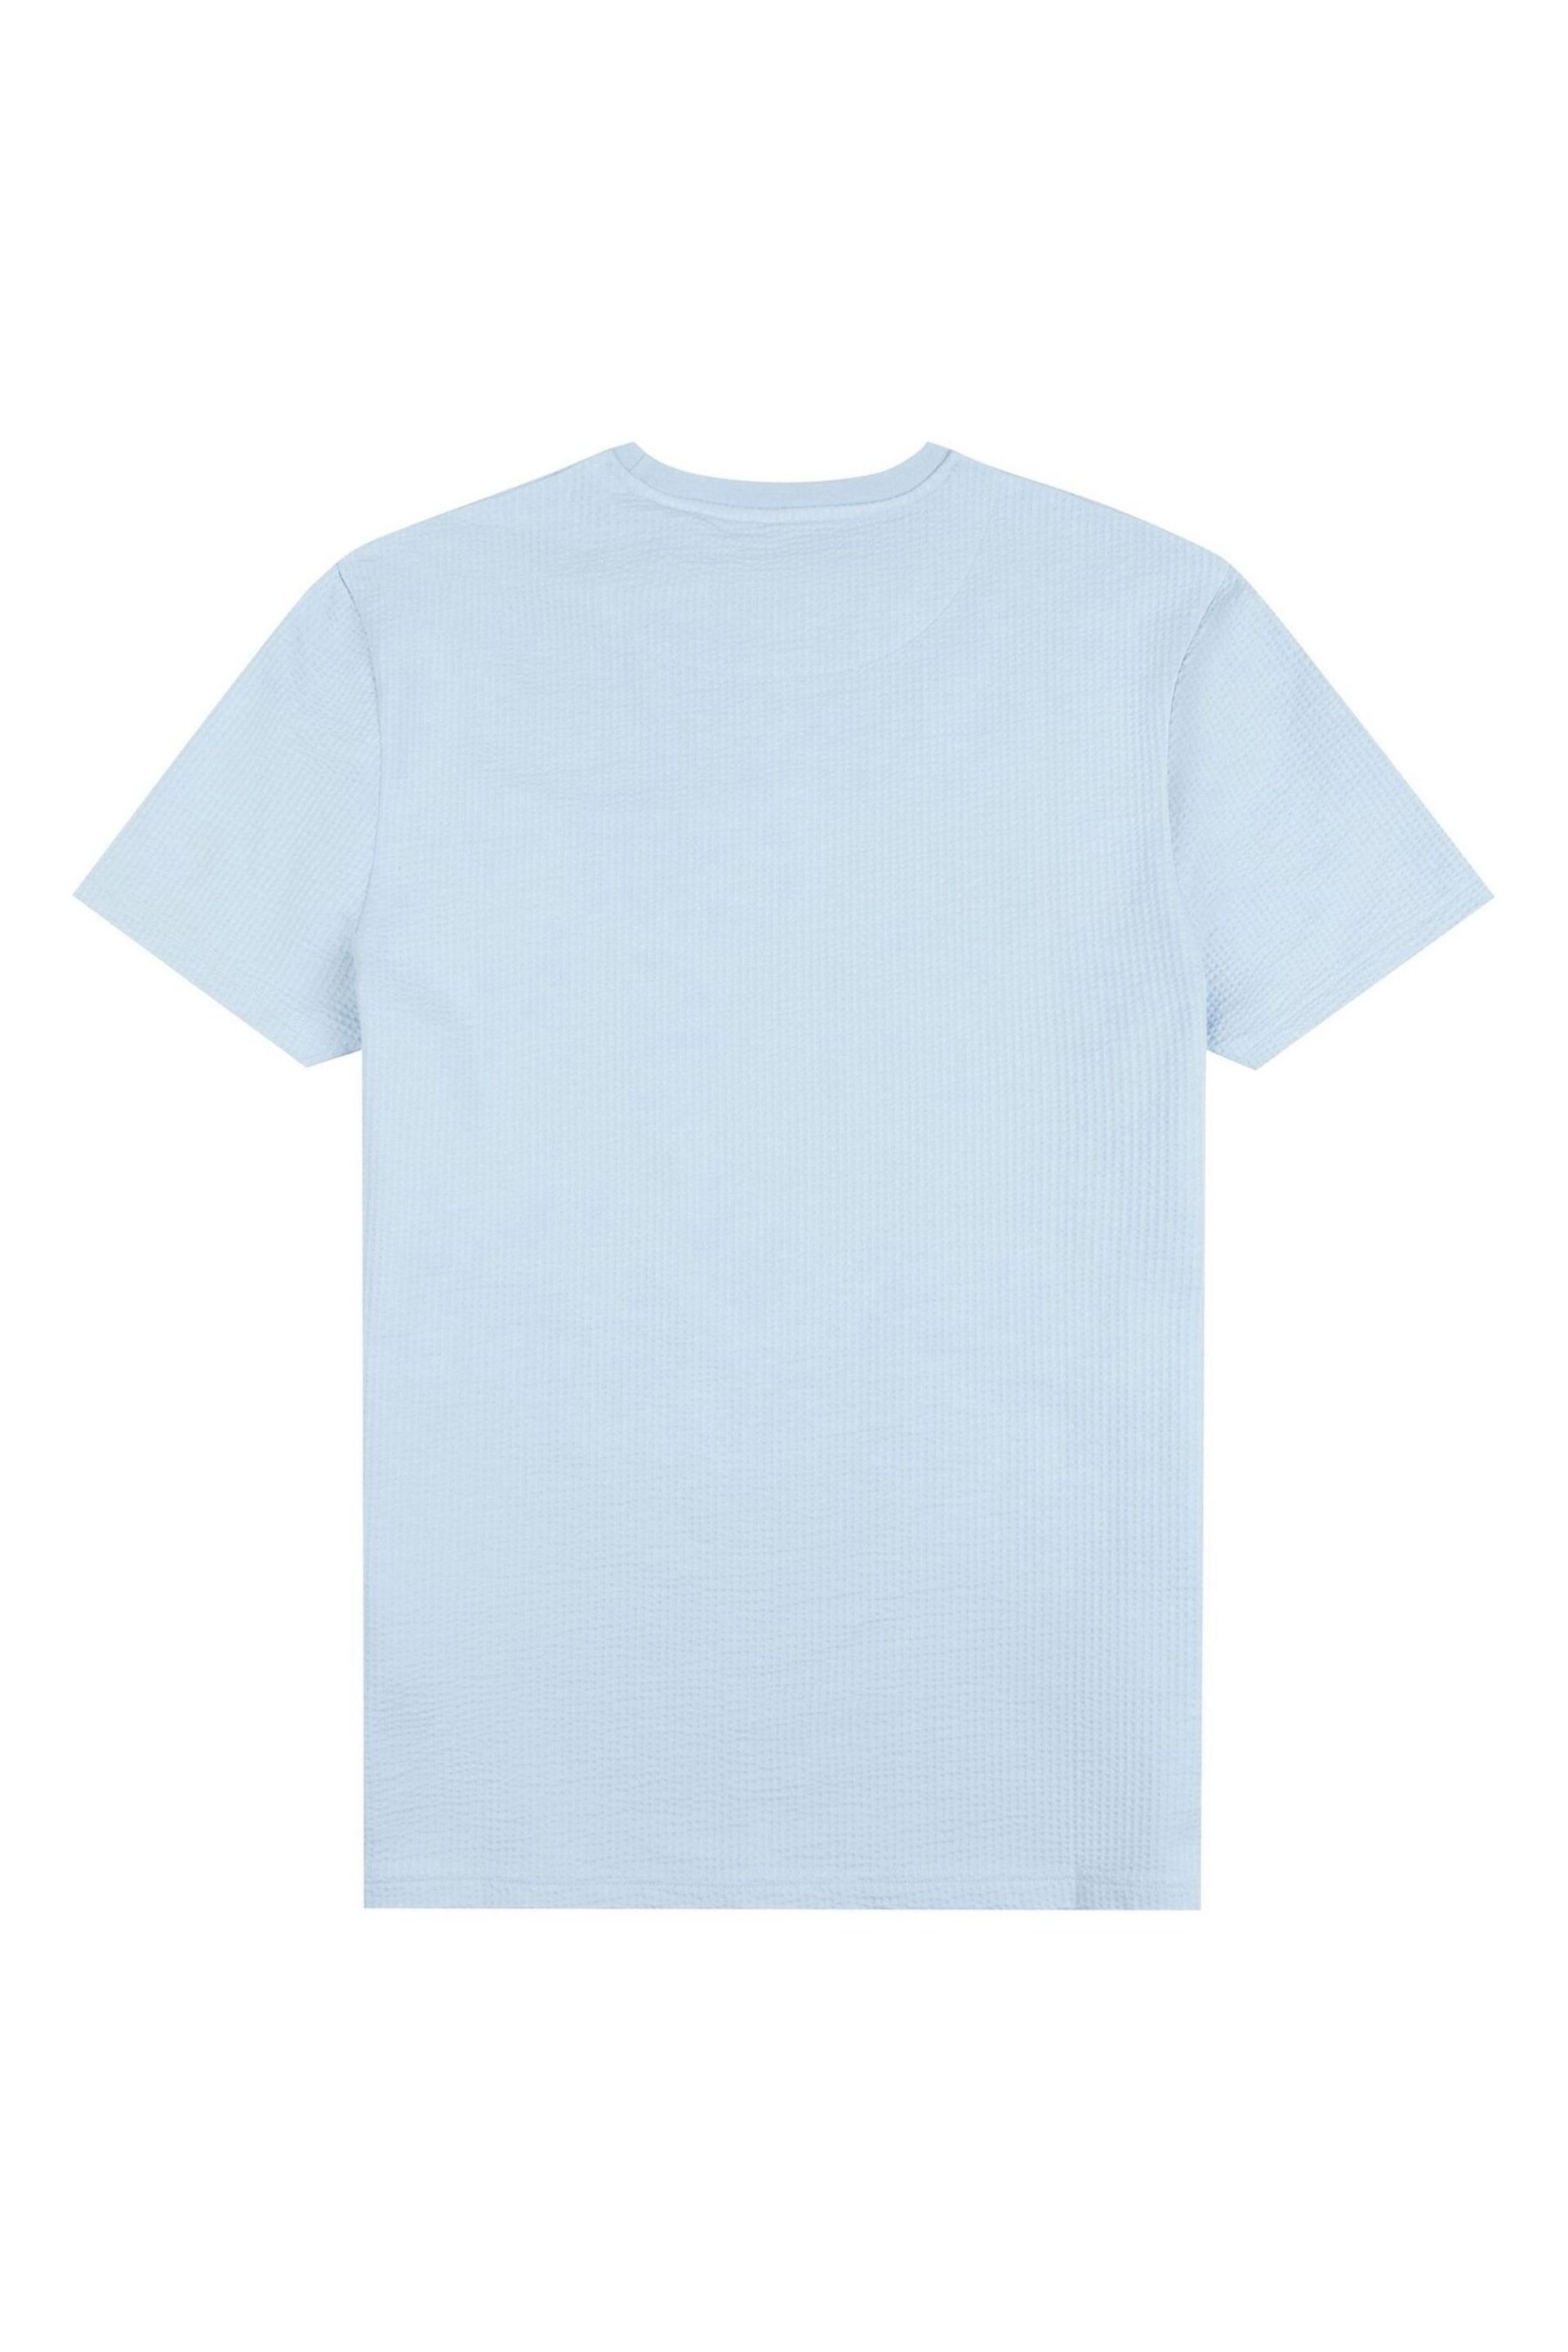 U.S. Polo Assn. Mens Blue Classic Fit Seersucker T-Shirt - Image 6 of 8